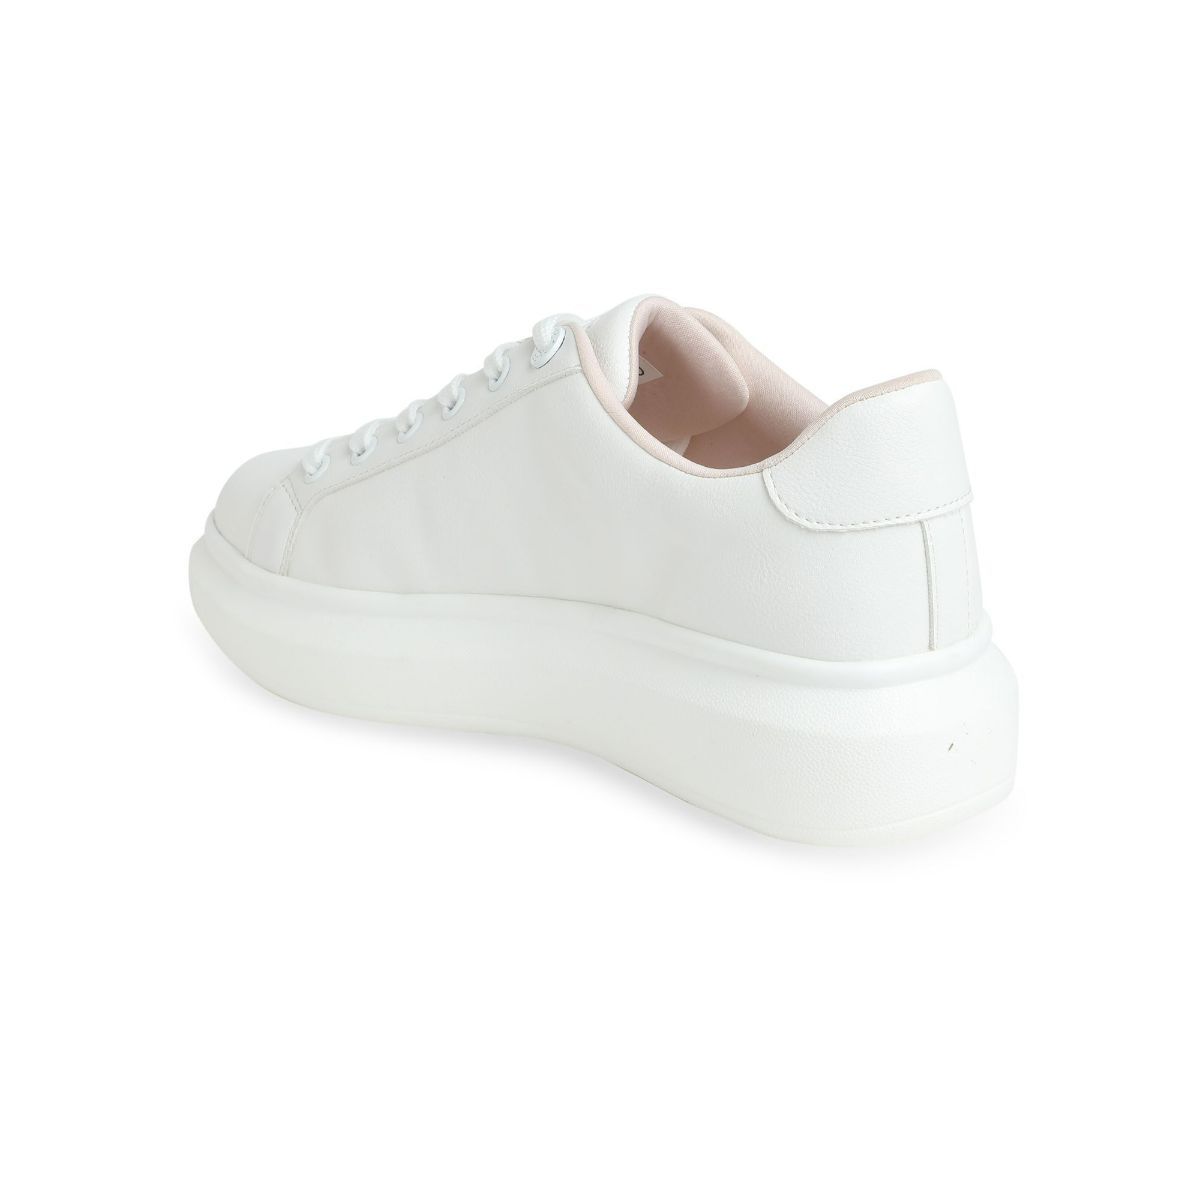 Aldo Peono Synthetic White Printed Sneakers: Buy Aldo Peono Synthetic ...